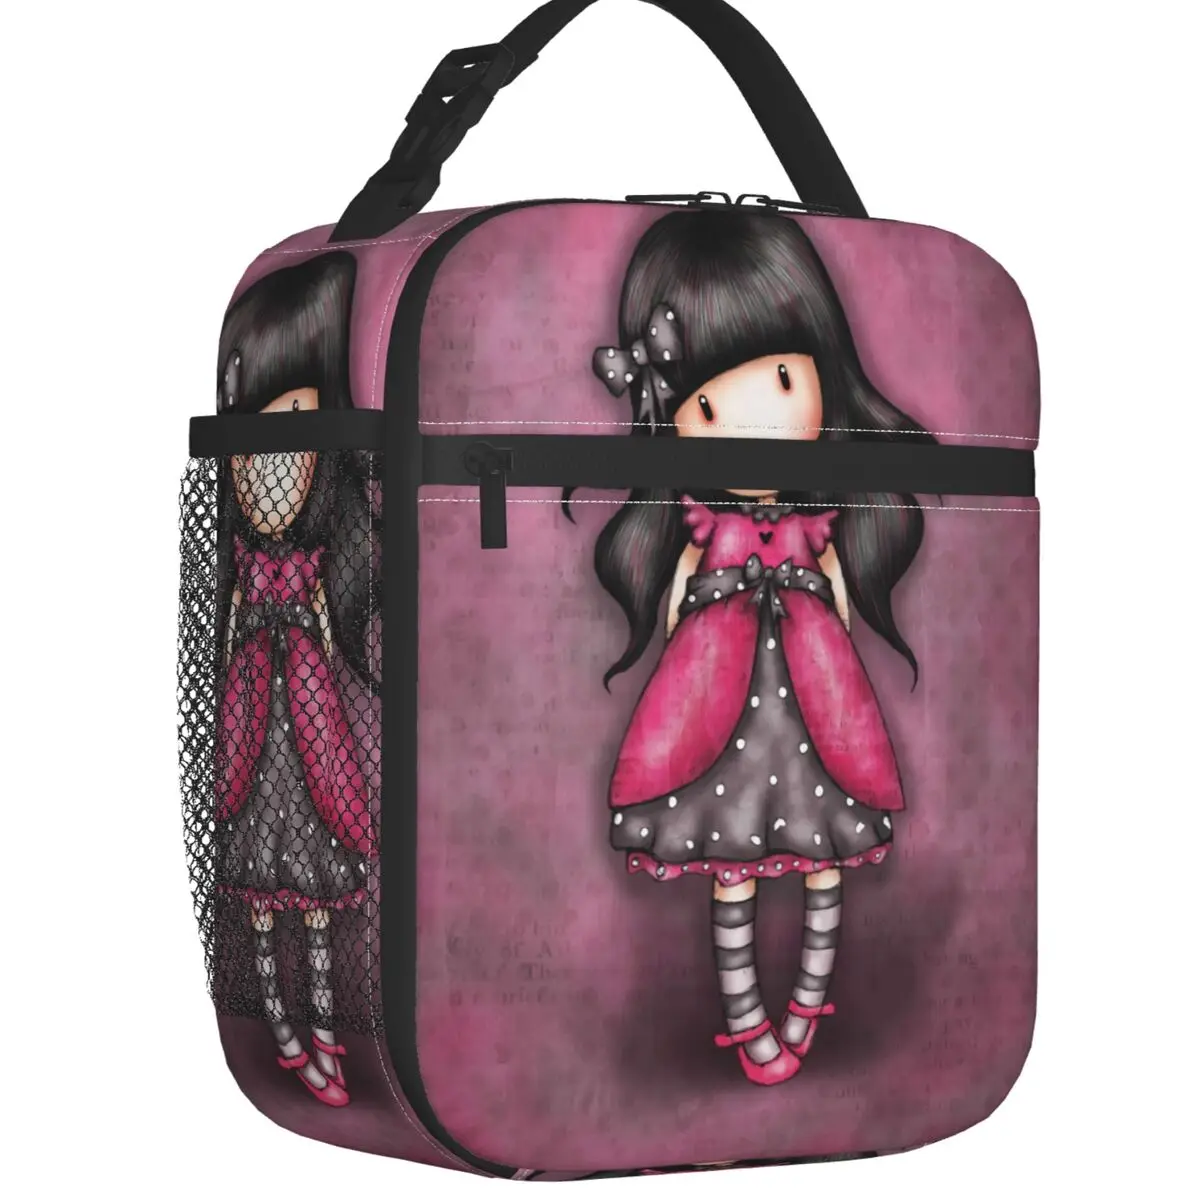 

Santoro Gorjuss Doll Insulated Lunch Bags for Women Anime Girl Resuable Cooler Thermal Bento Box Work School Travel